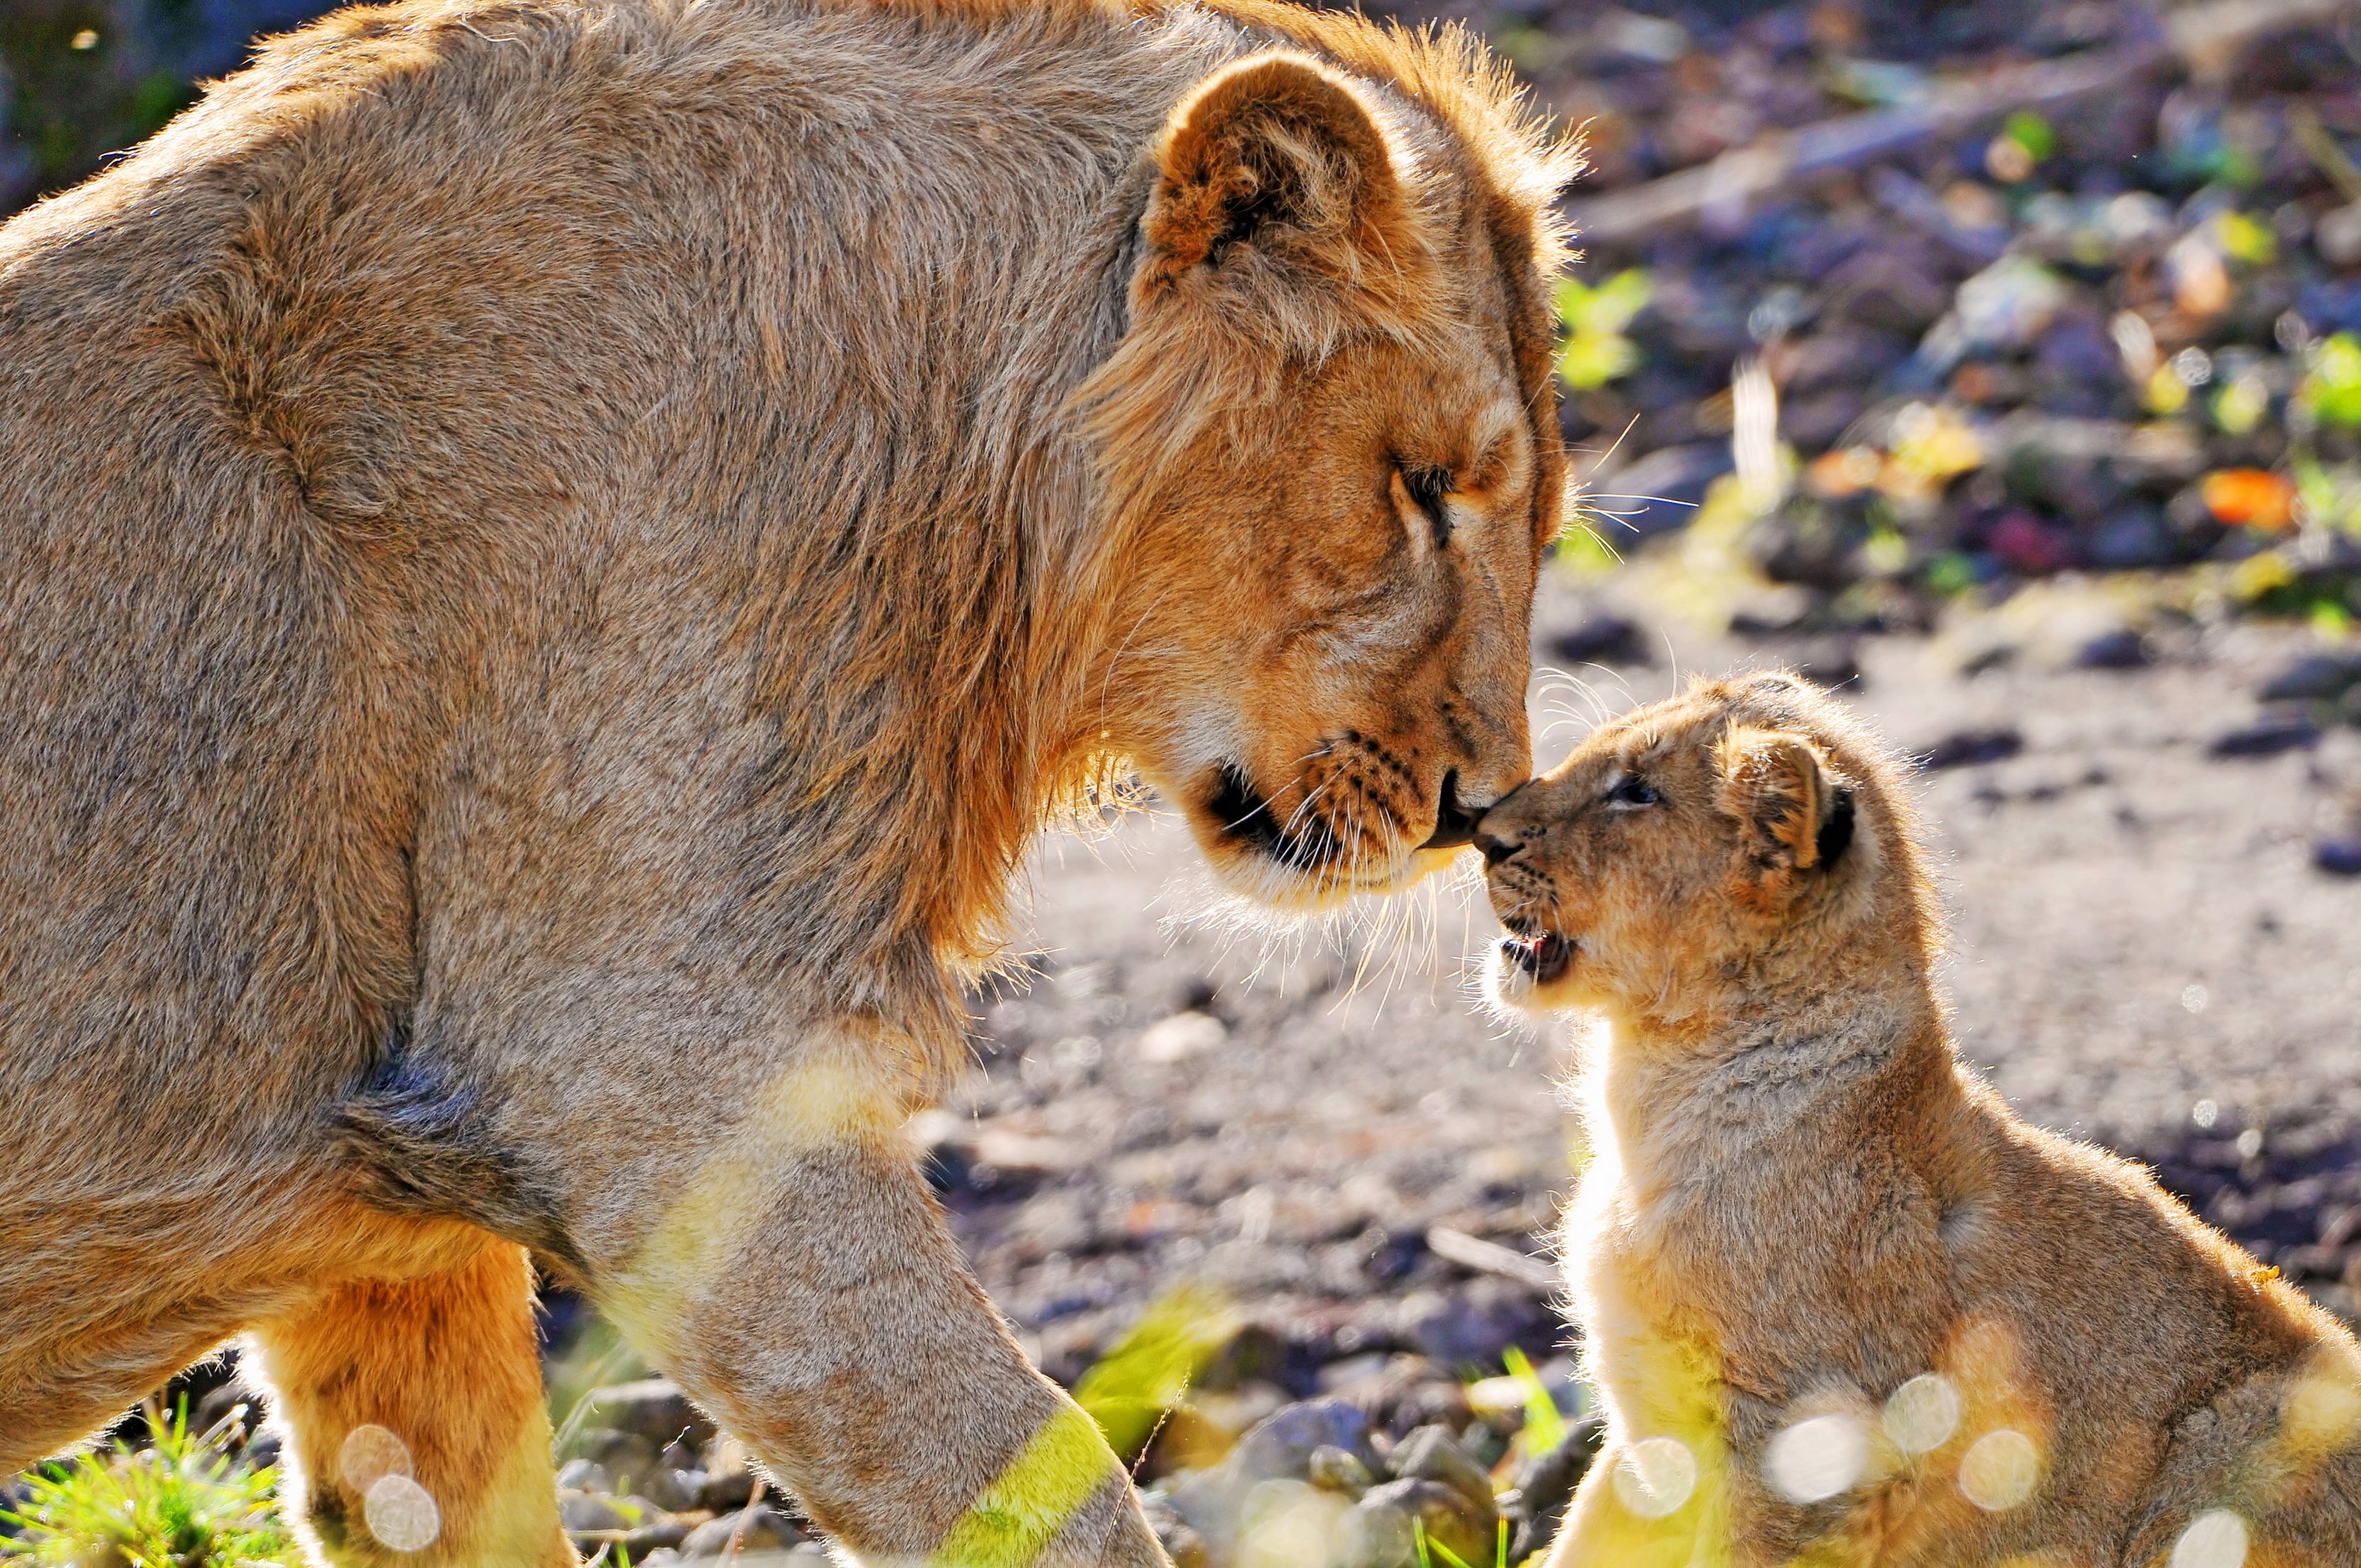 Lioness and cub, care, attention, affection, predator, lion - Feline